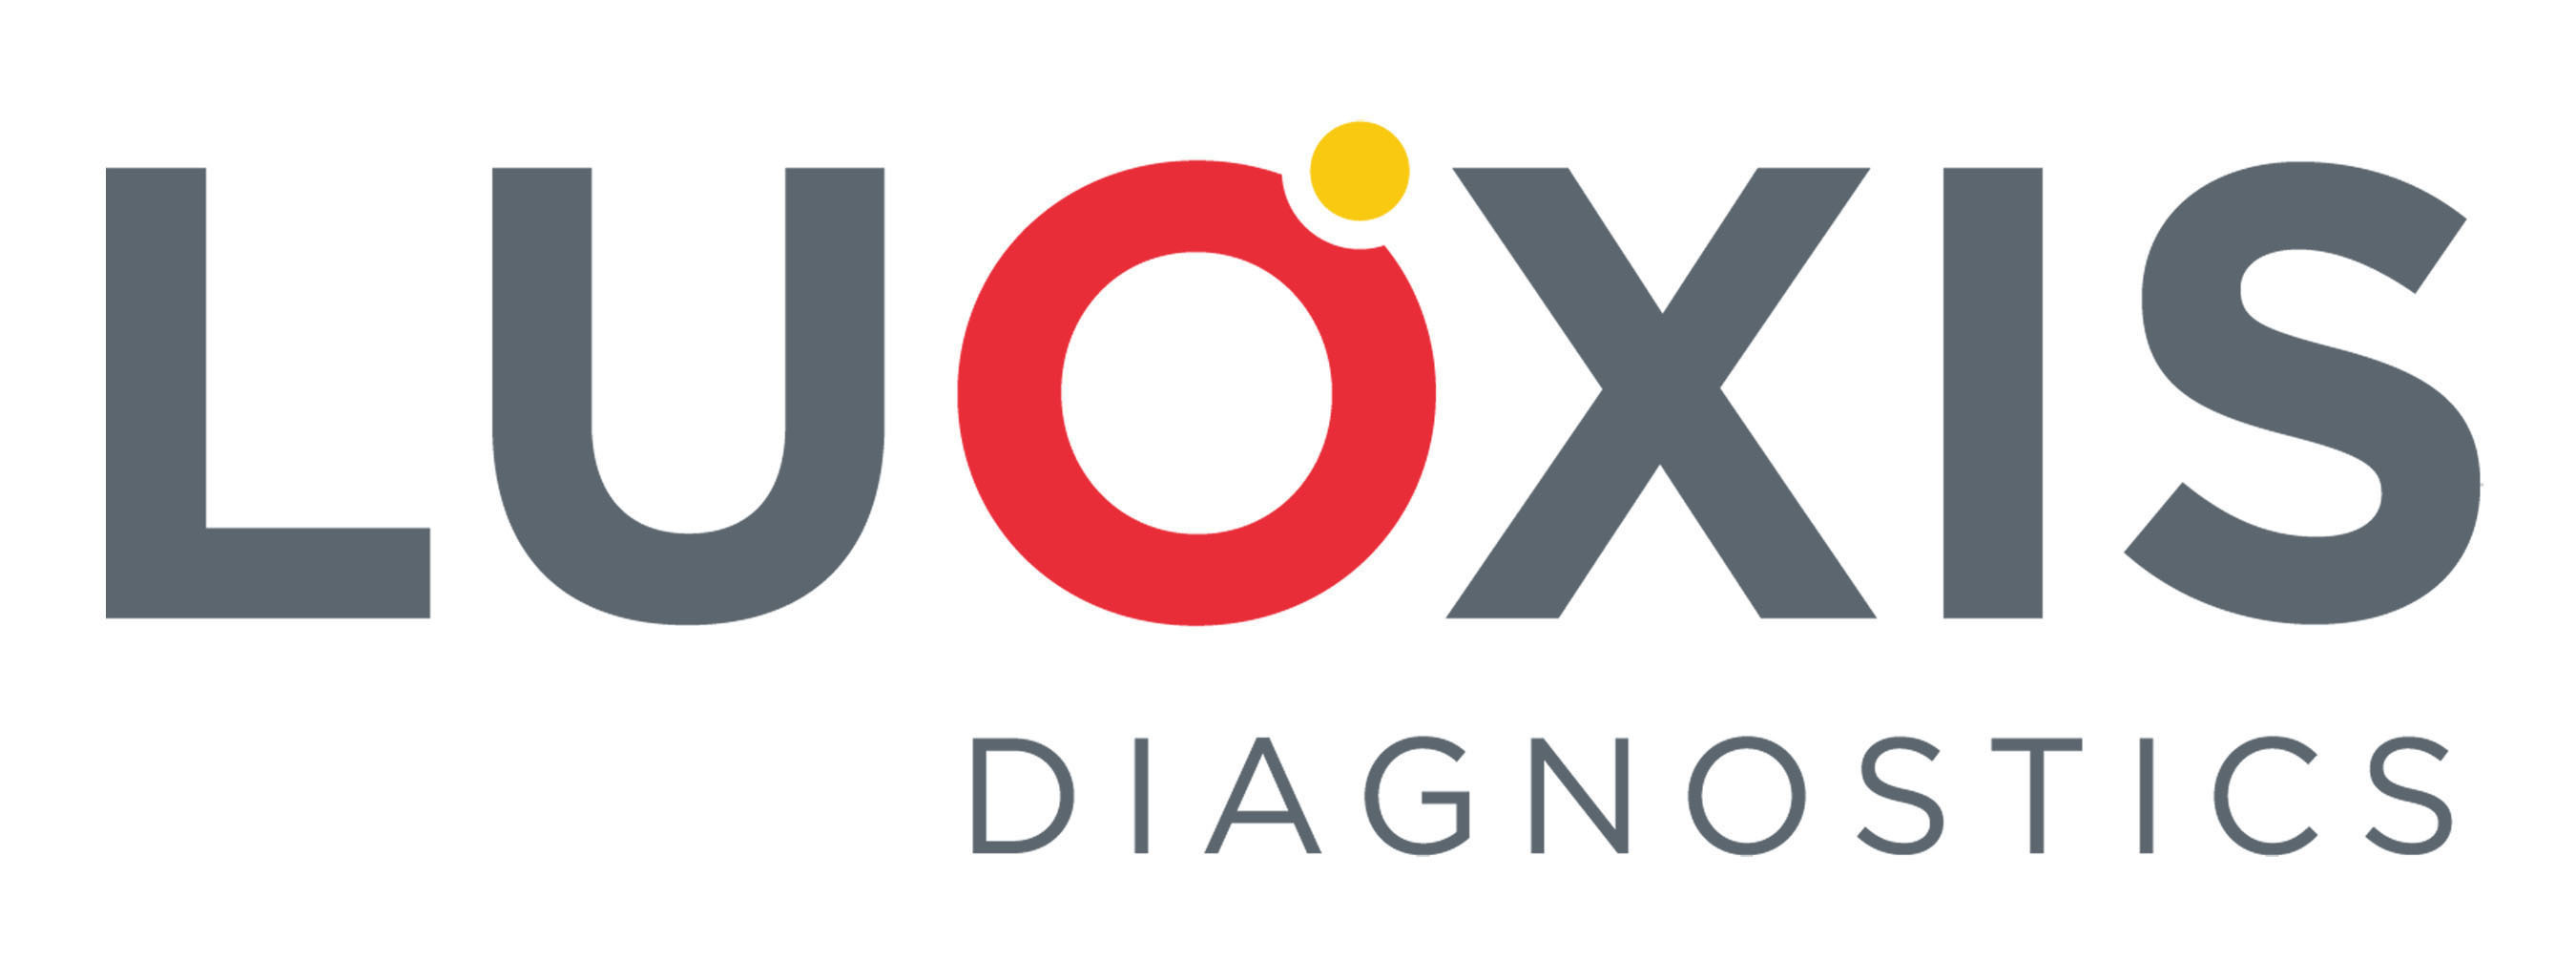 Luoxis Diagnostics Logo. (PRNewsFoto/Ampio Pharmaceuticals, Inc.) (PRNewsFoto/AMPIO PHARMACEUTICALS, INC.)